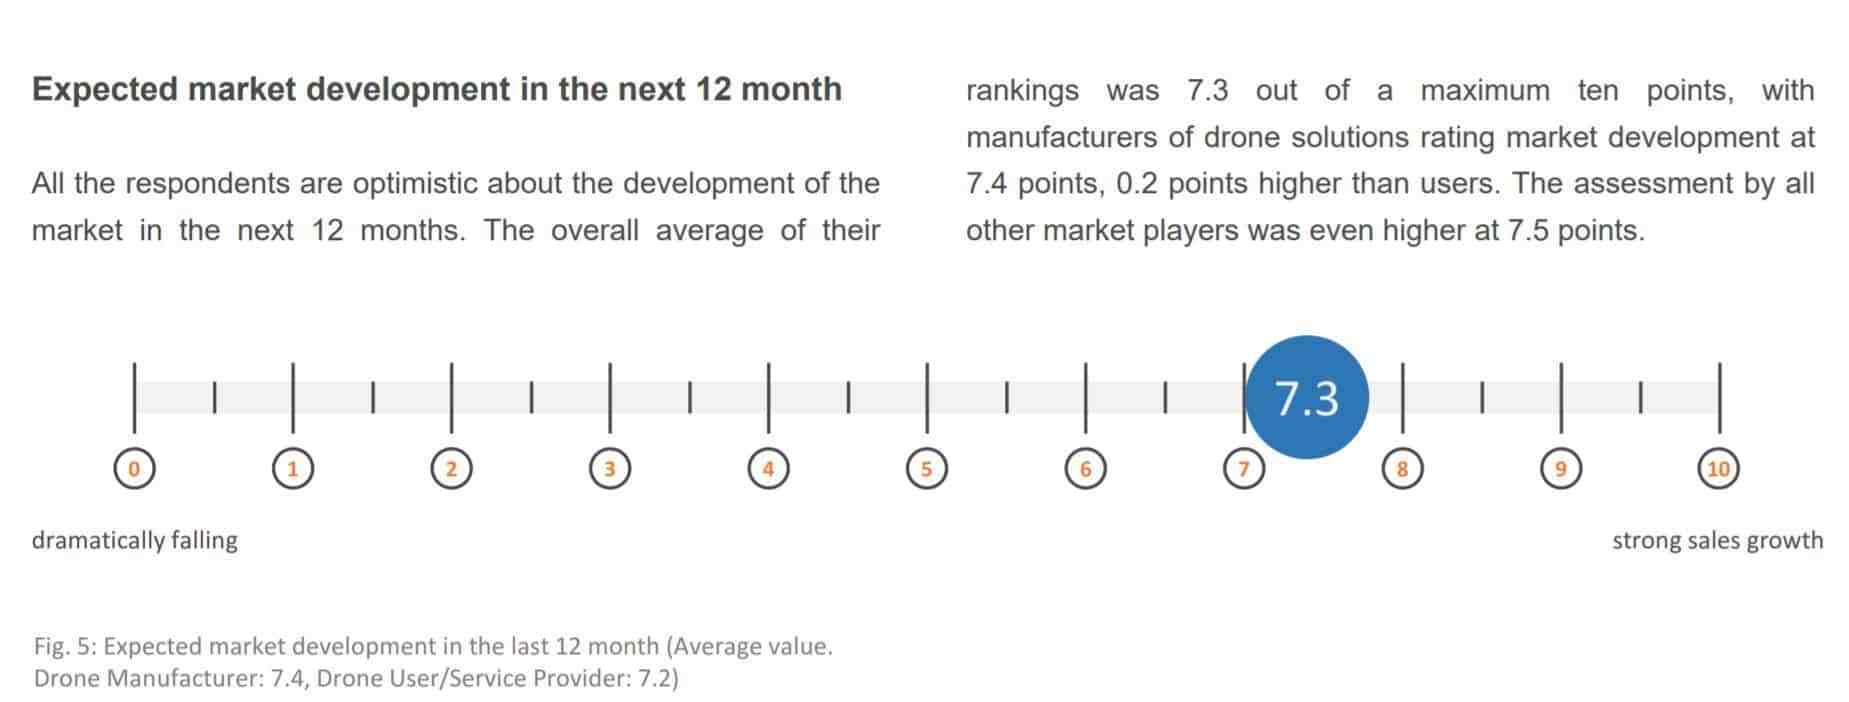 European drone market growth